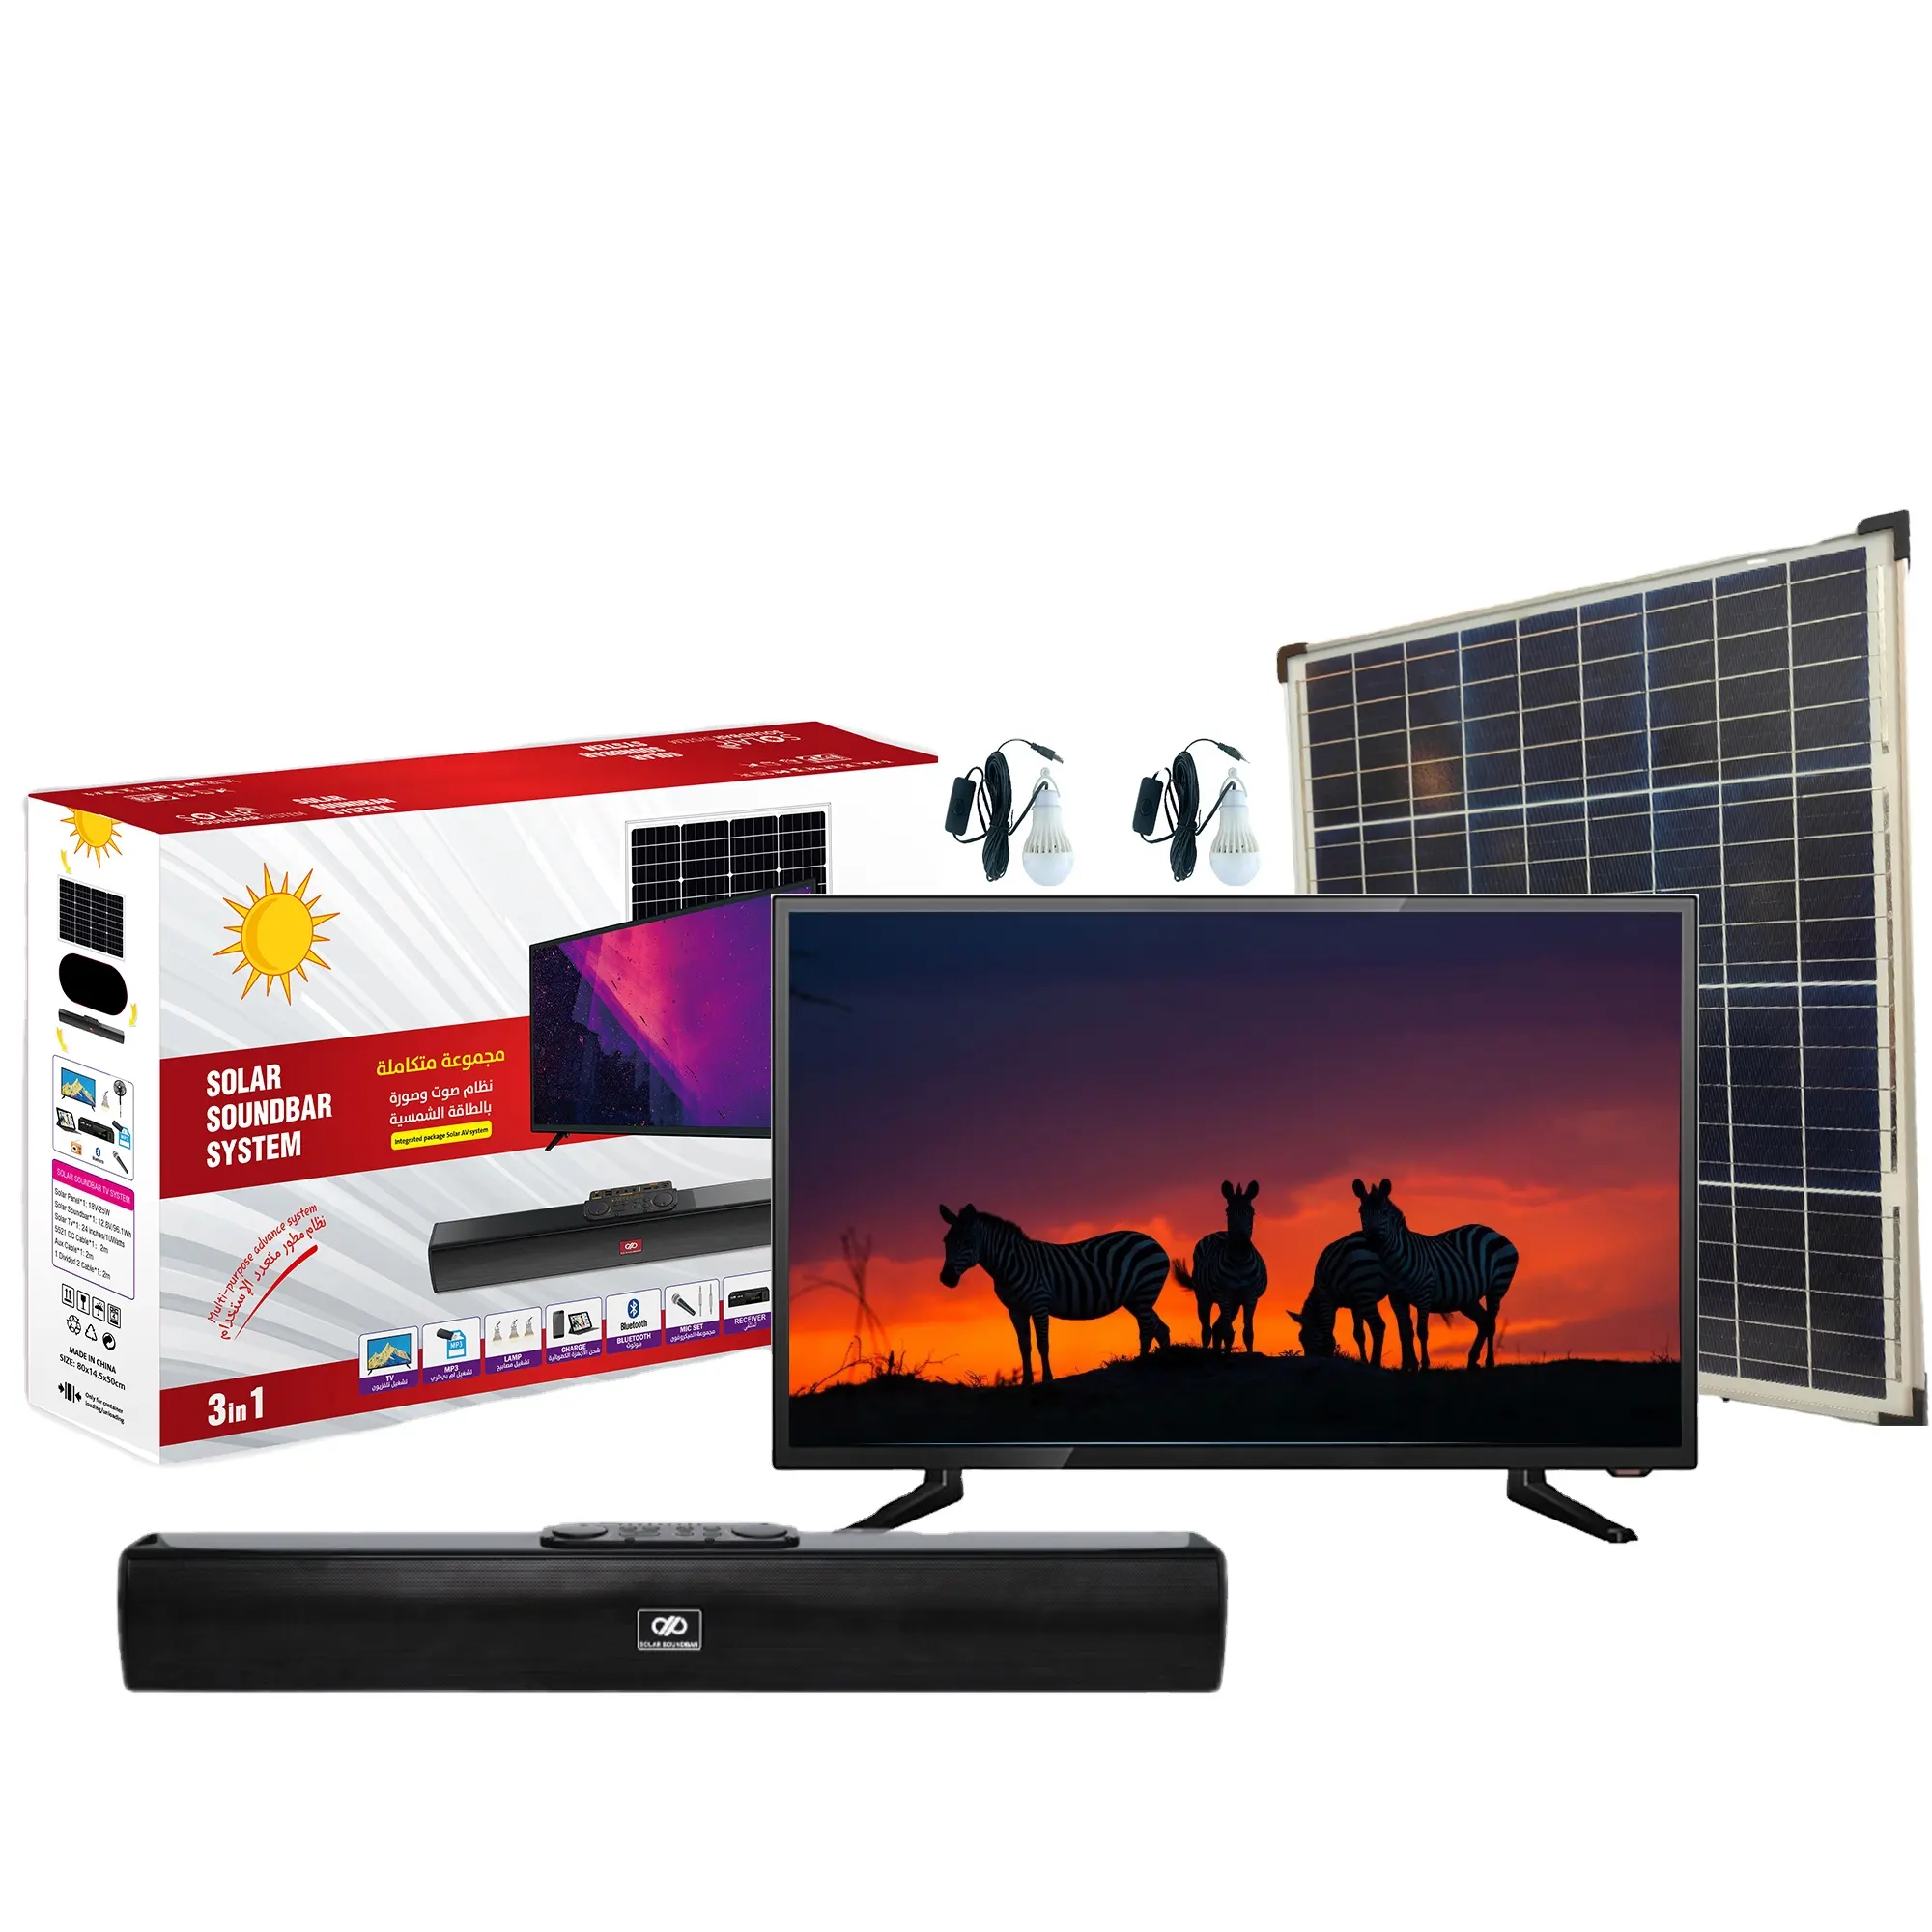 Pcv Solar Soundbar TV System new energy 36ah Solar Generator HiFi Sound solar panel Effect Speaker Perfect Outdoor